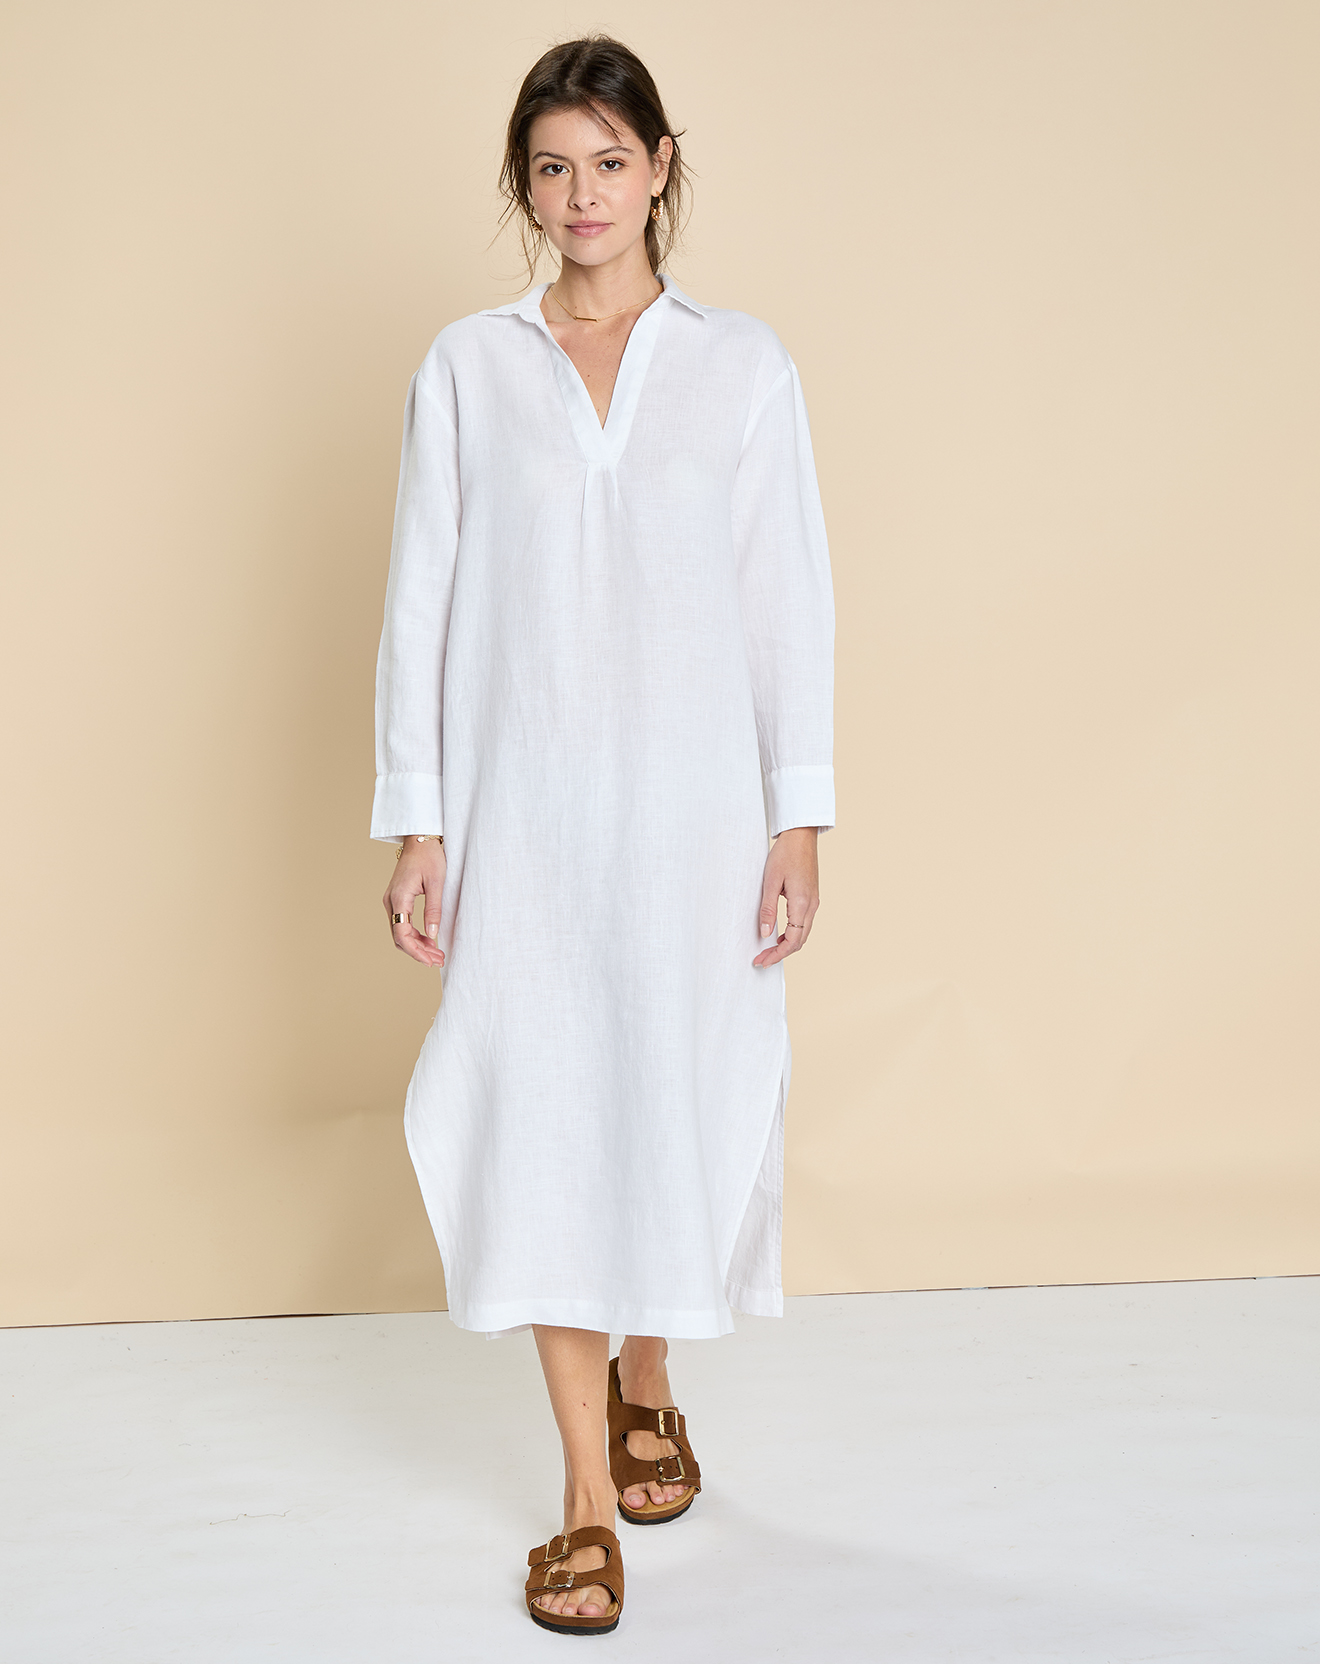 harris wilson - robe 100% lin elinda blanche